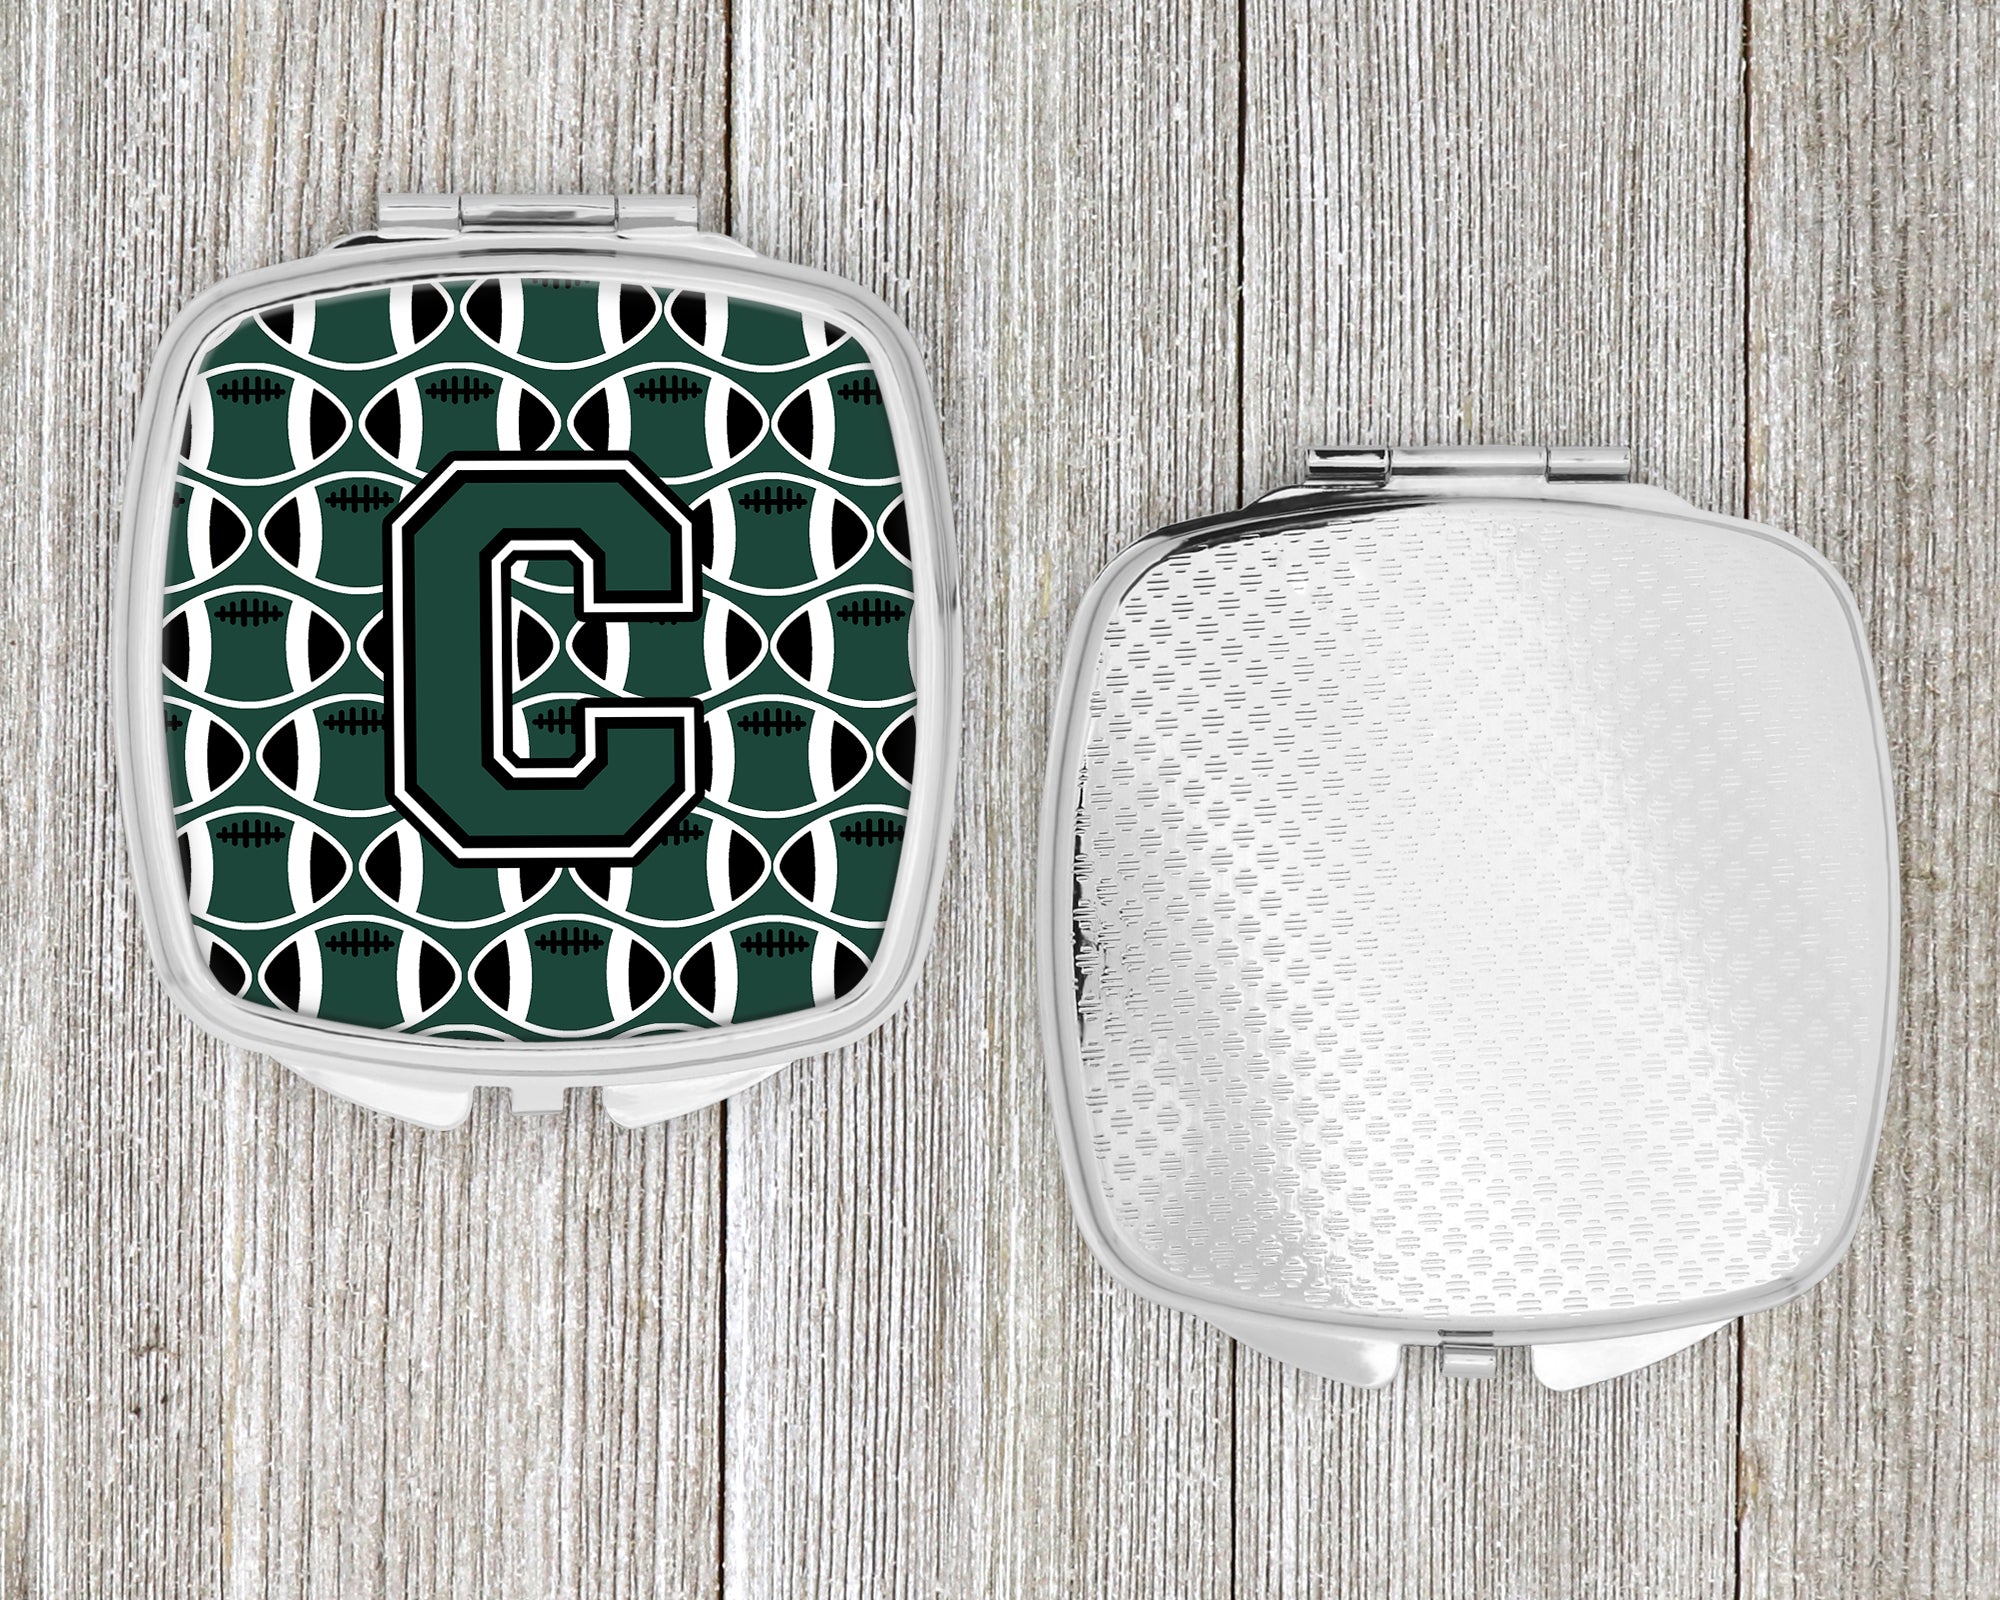 Lettre C Football Vert et Blanc Miroir Compact CJ1071-CSCM